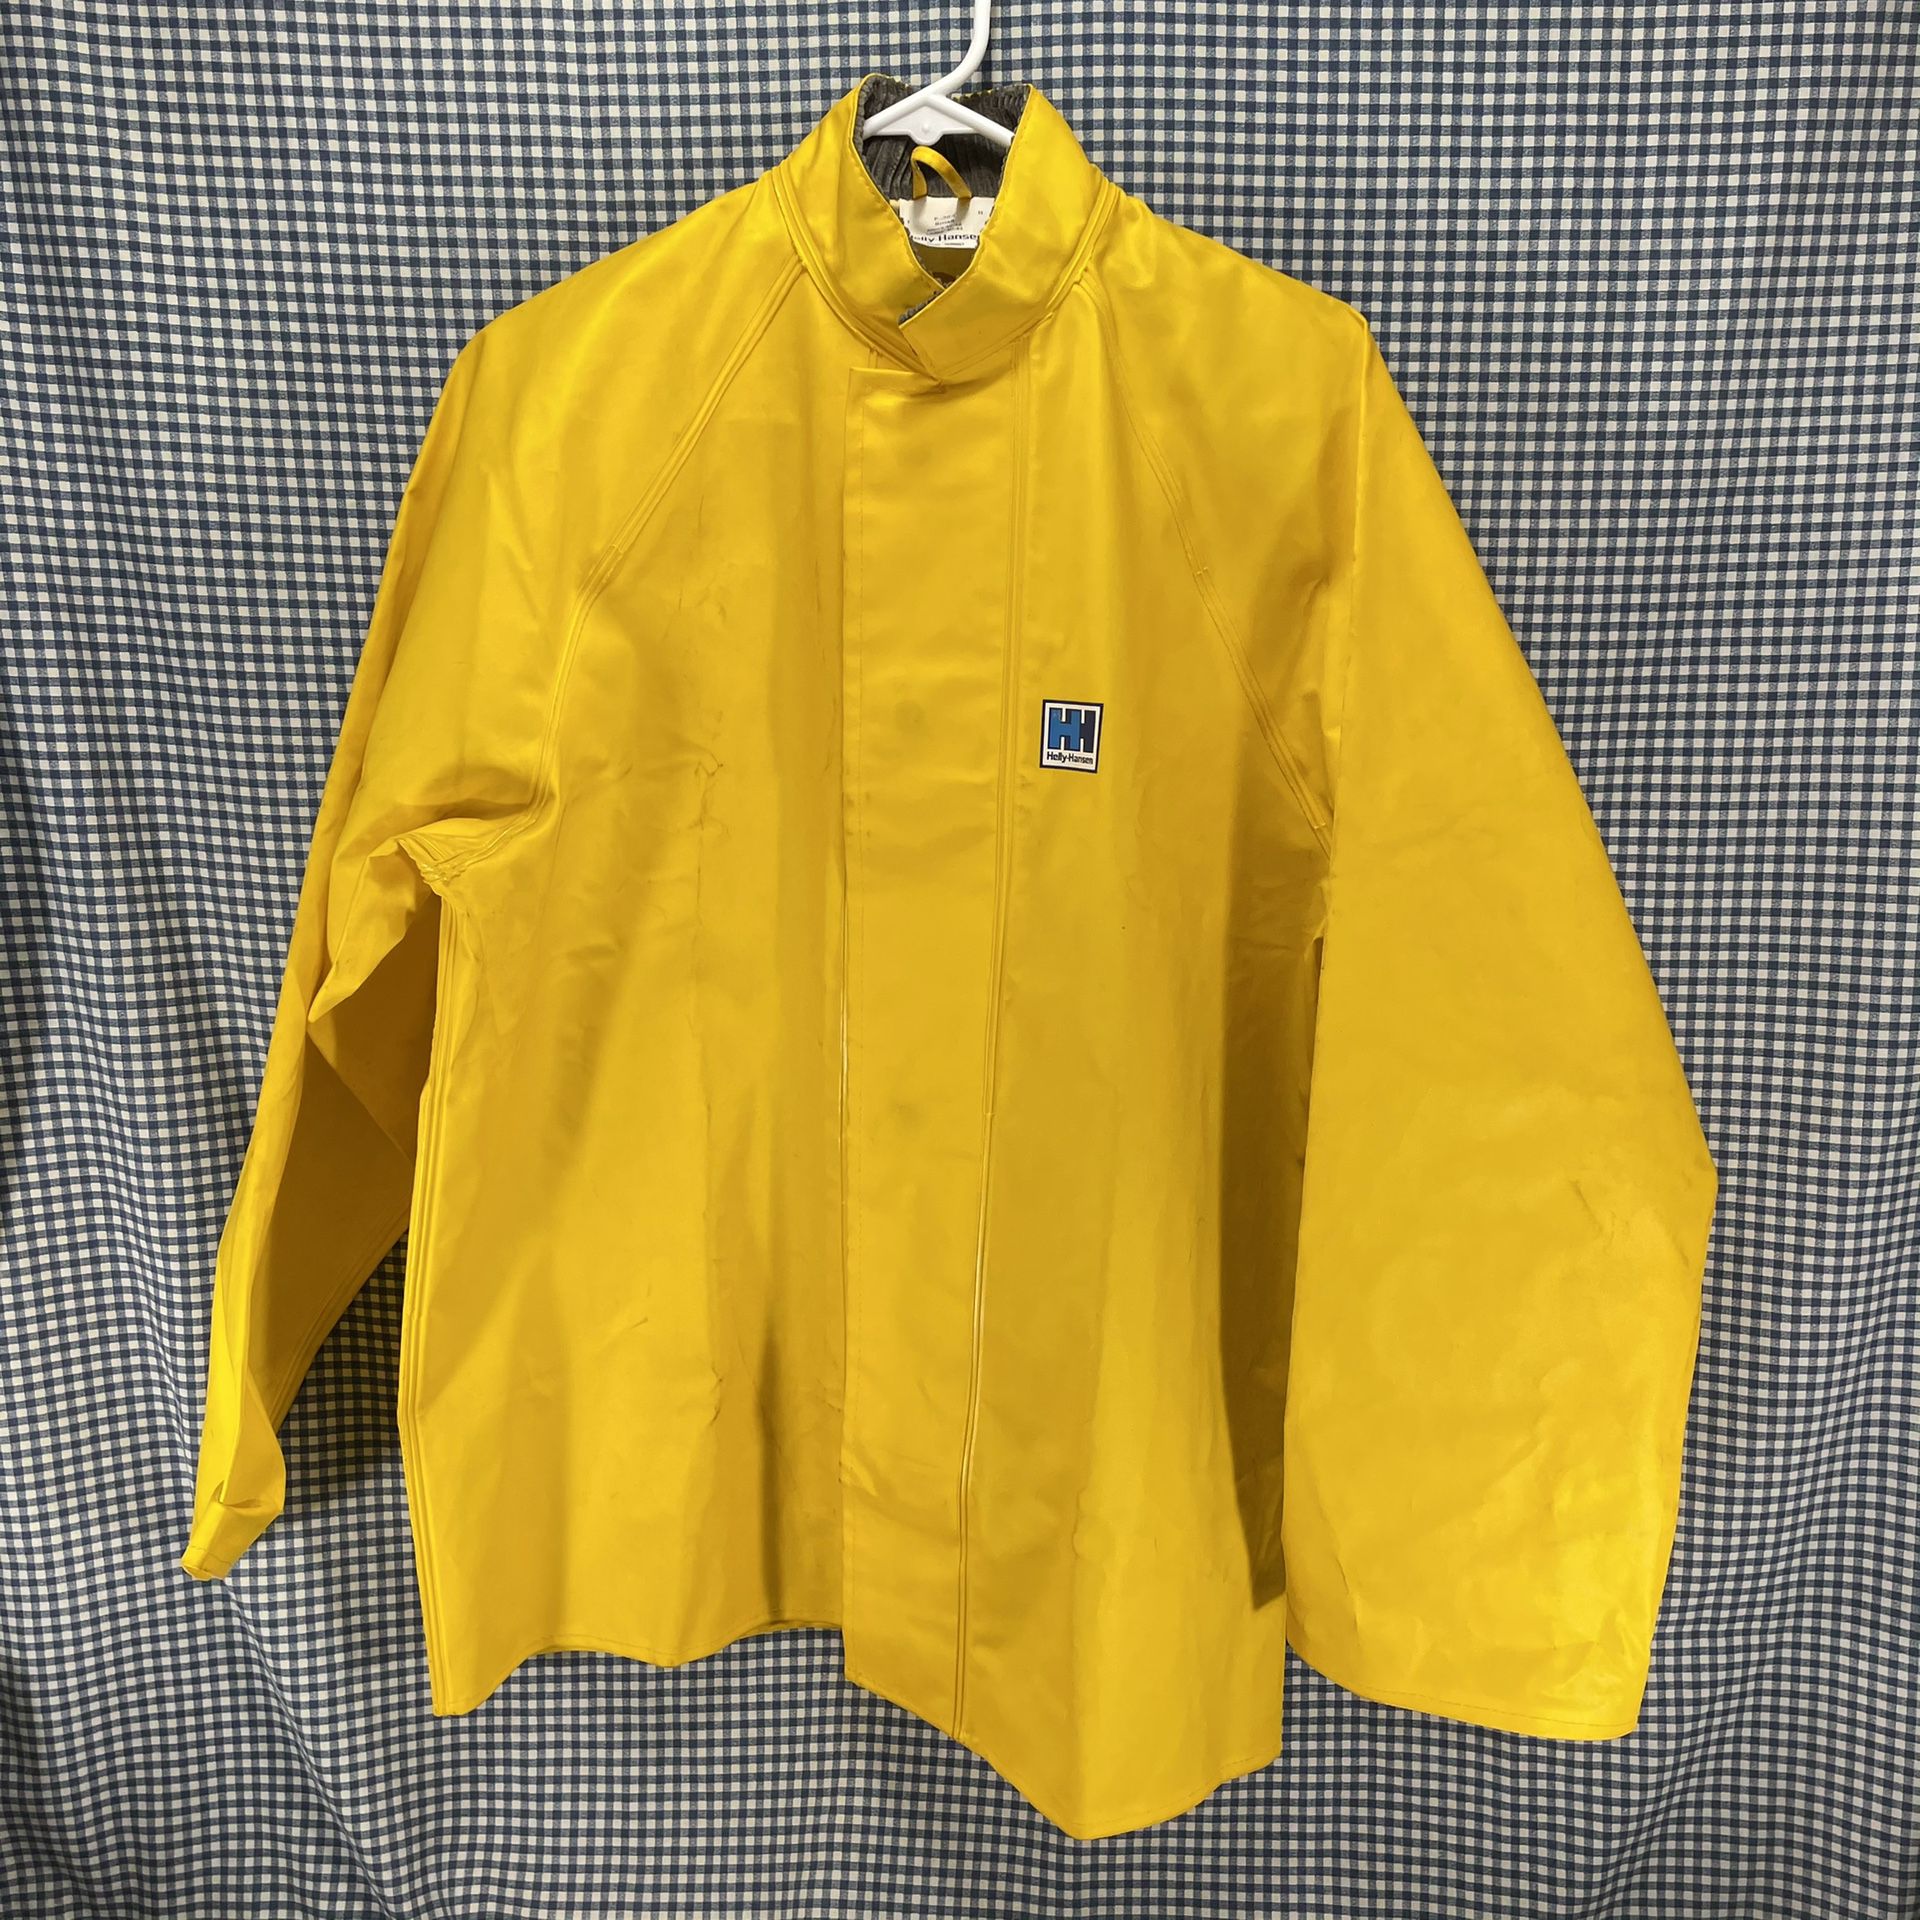 Helly Hansen P364 Yellow PVC Hoodless Rain Jacket Size Small